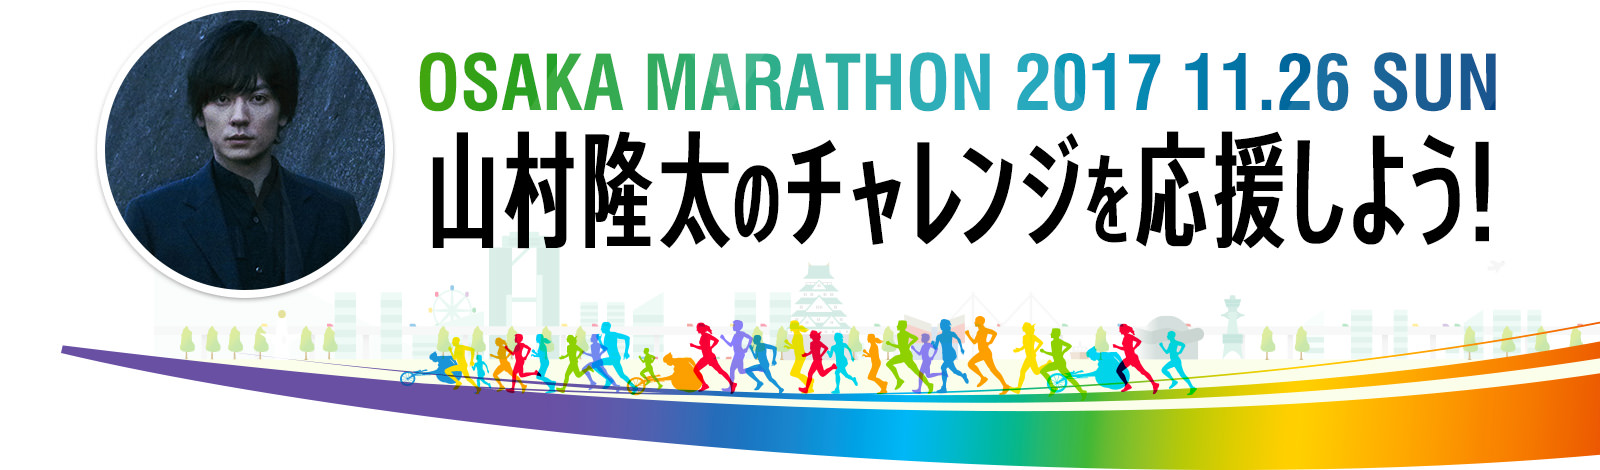 OSAKA MARATHON 2017 11.26 SUN 山村隆太のチャレンジを応援しよう!